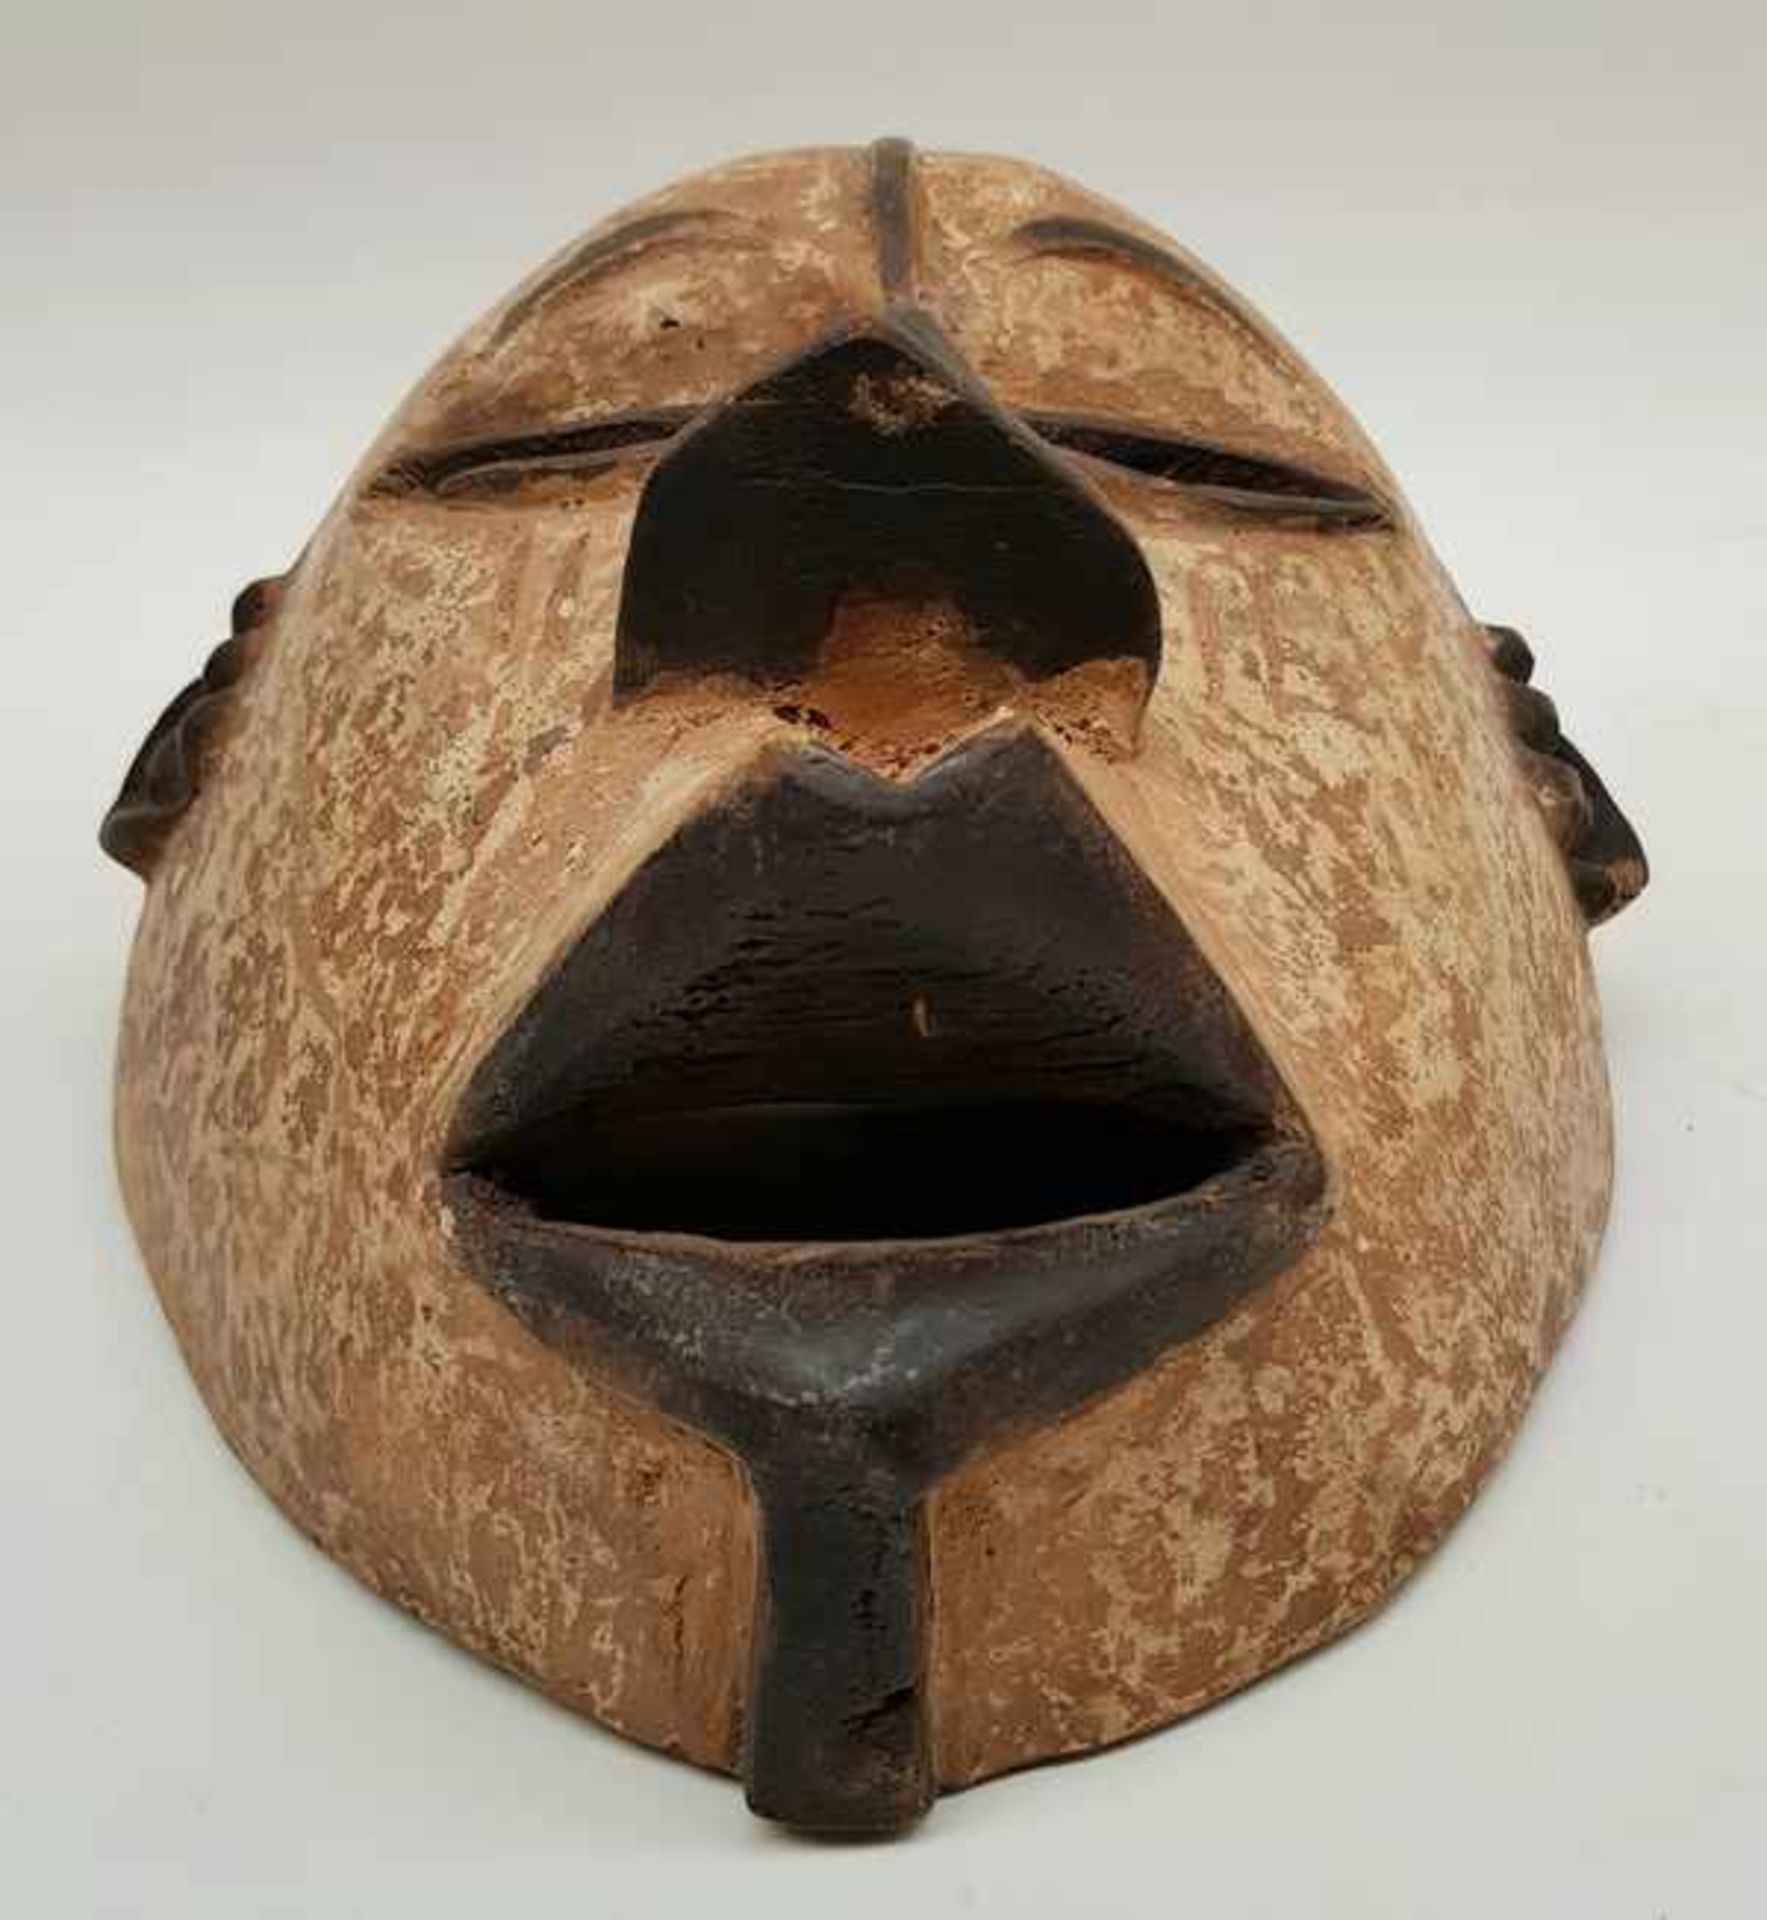 (Etnografica) Hout. Decoratieve Maskers Nigeria. Africa.Hout. Decoratieve Maskers Nigeria. Africa. - Image 5 of 8